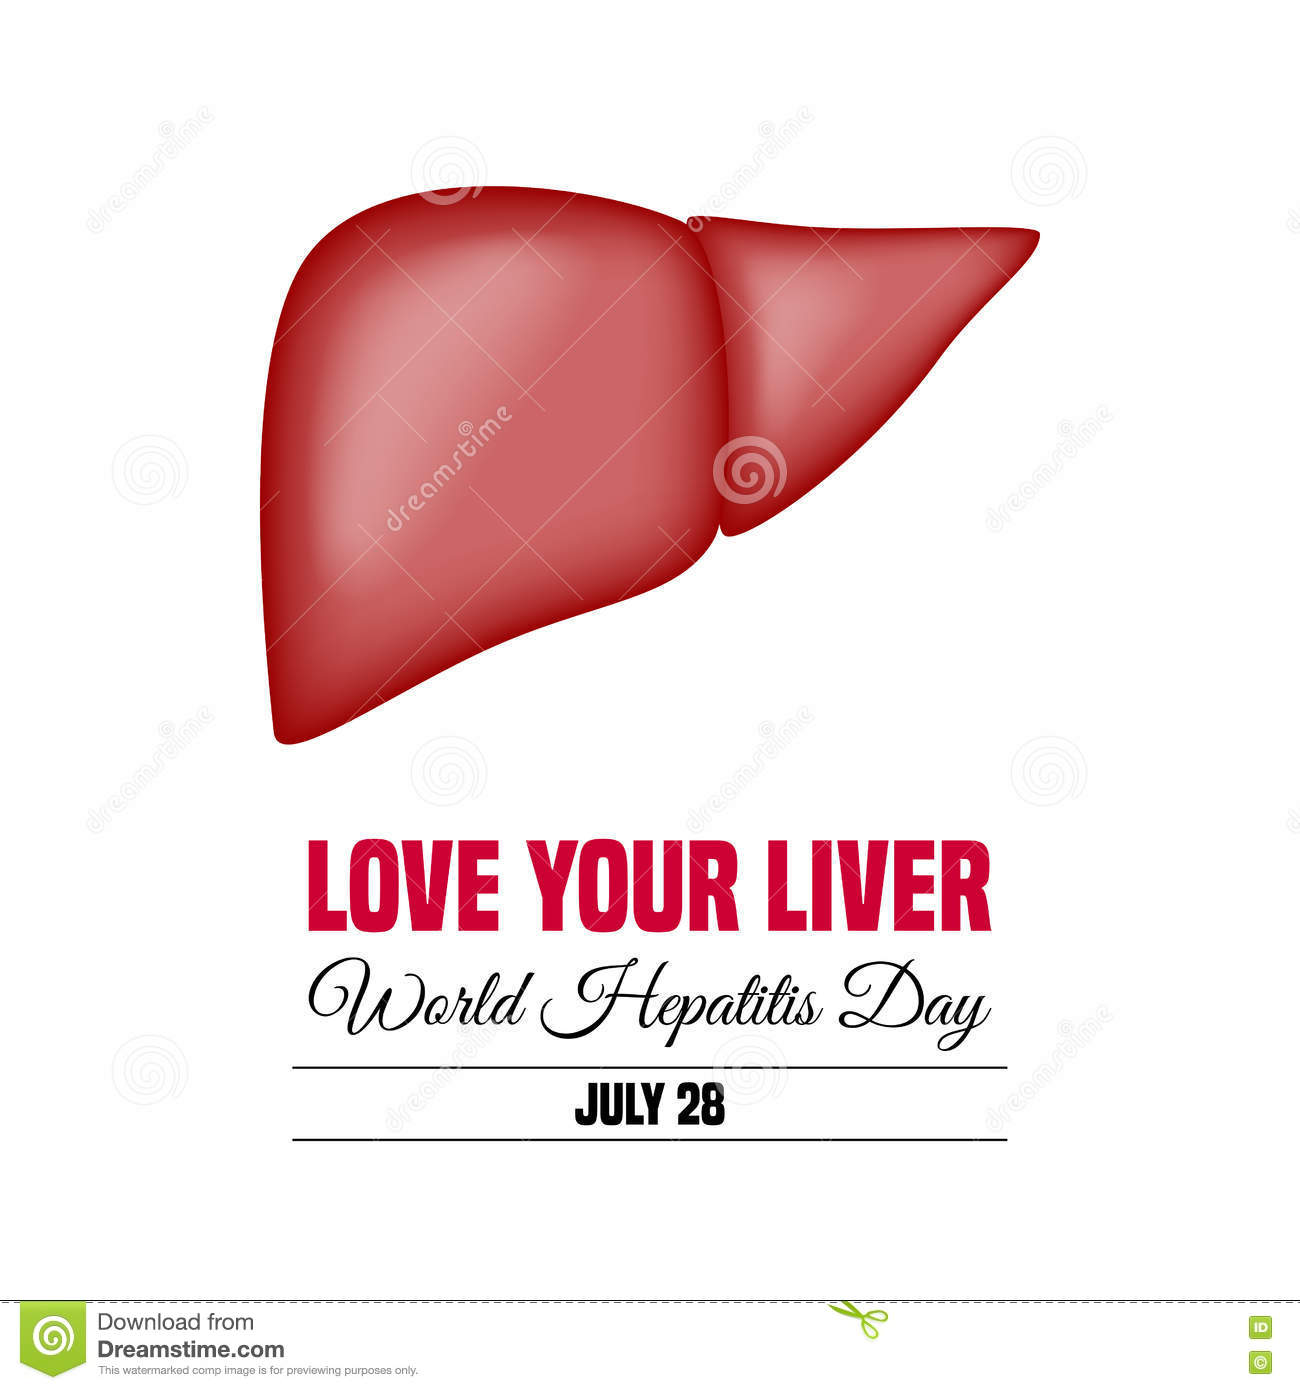 Love Your Liver World Hepatitis Day July 28 Illustration